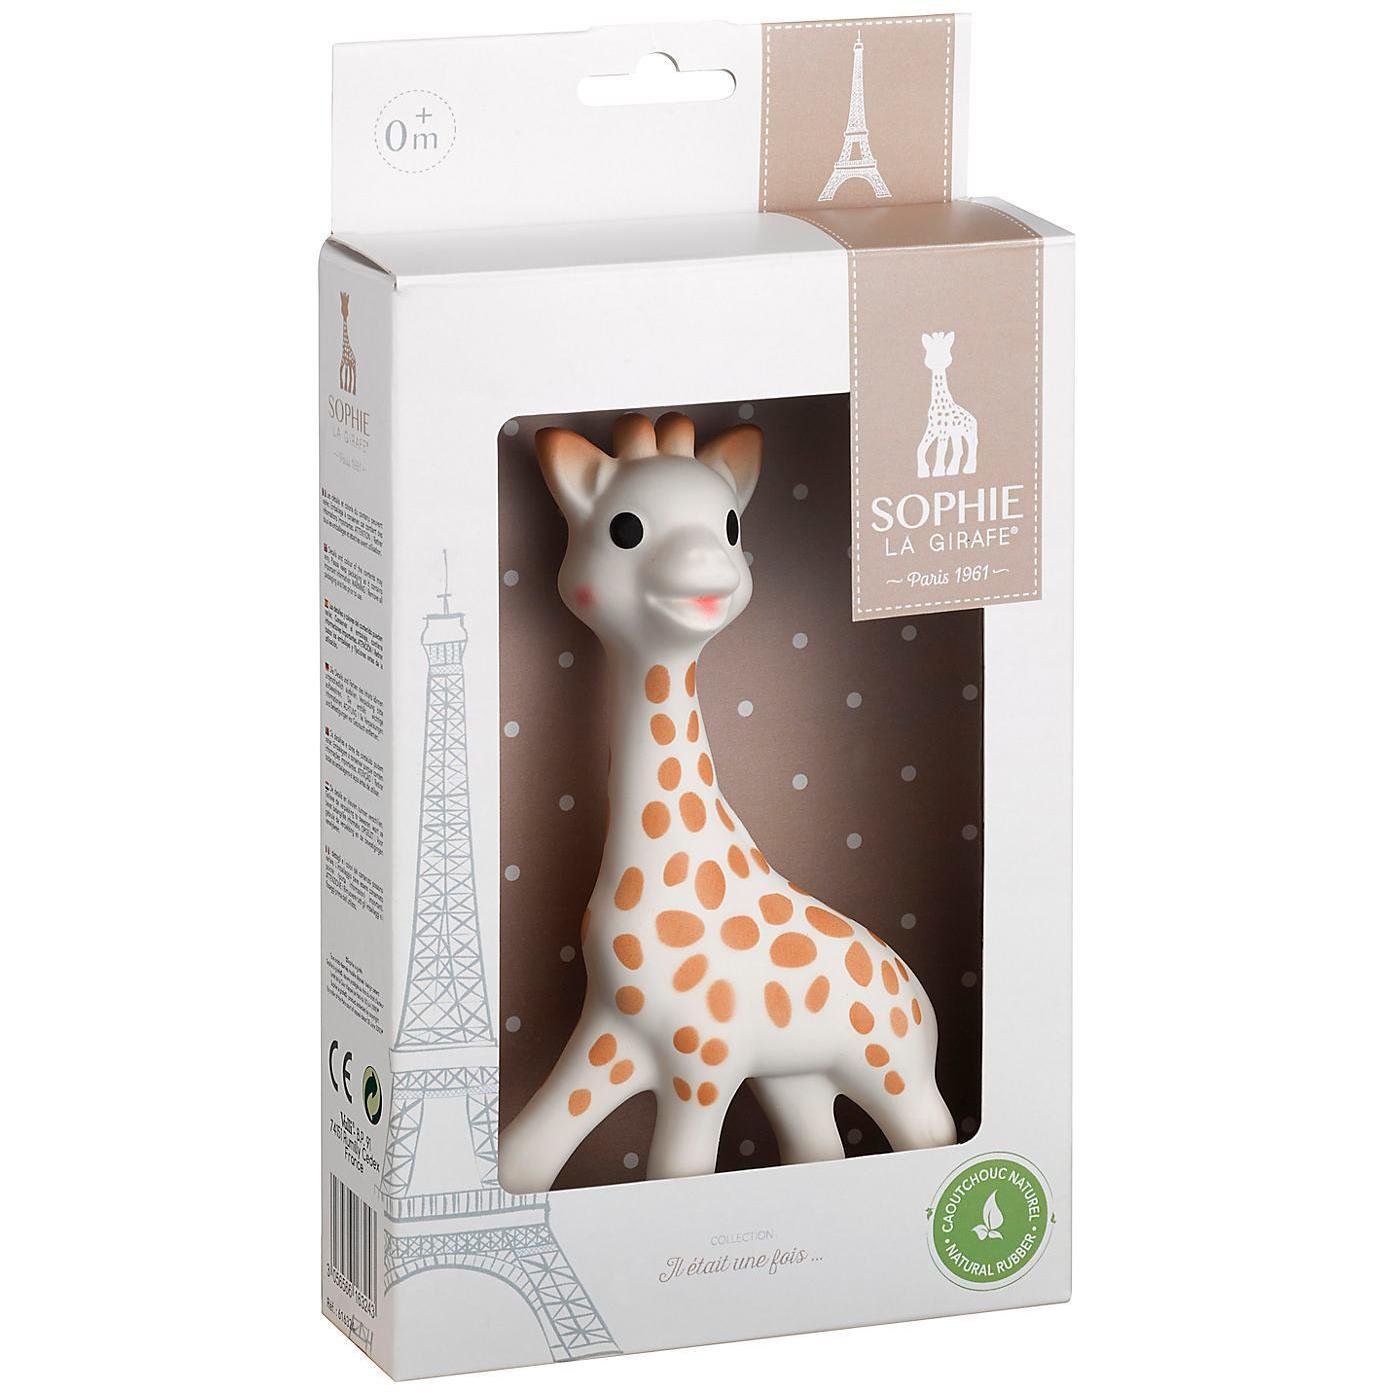 Girafa Sophie Vulli - Com Certificado Originalidade Bestseller Anne Claire Baby Store Ltd. 